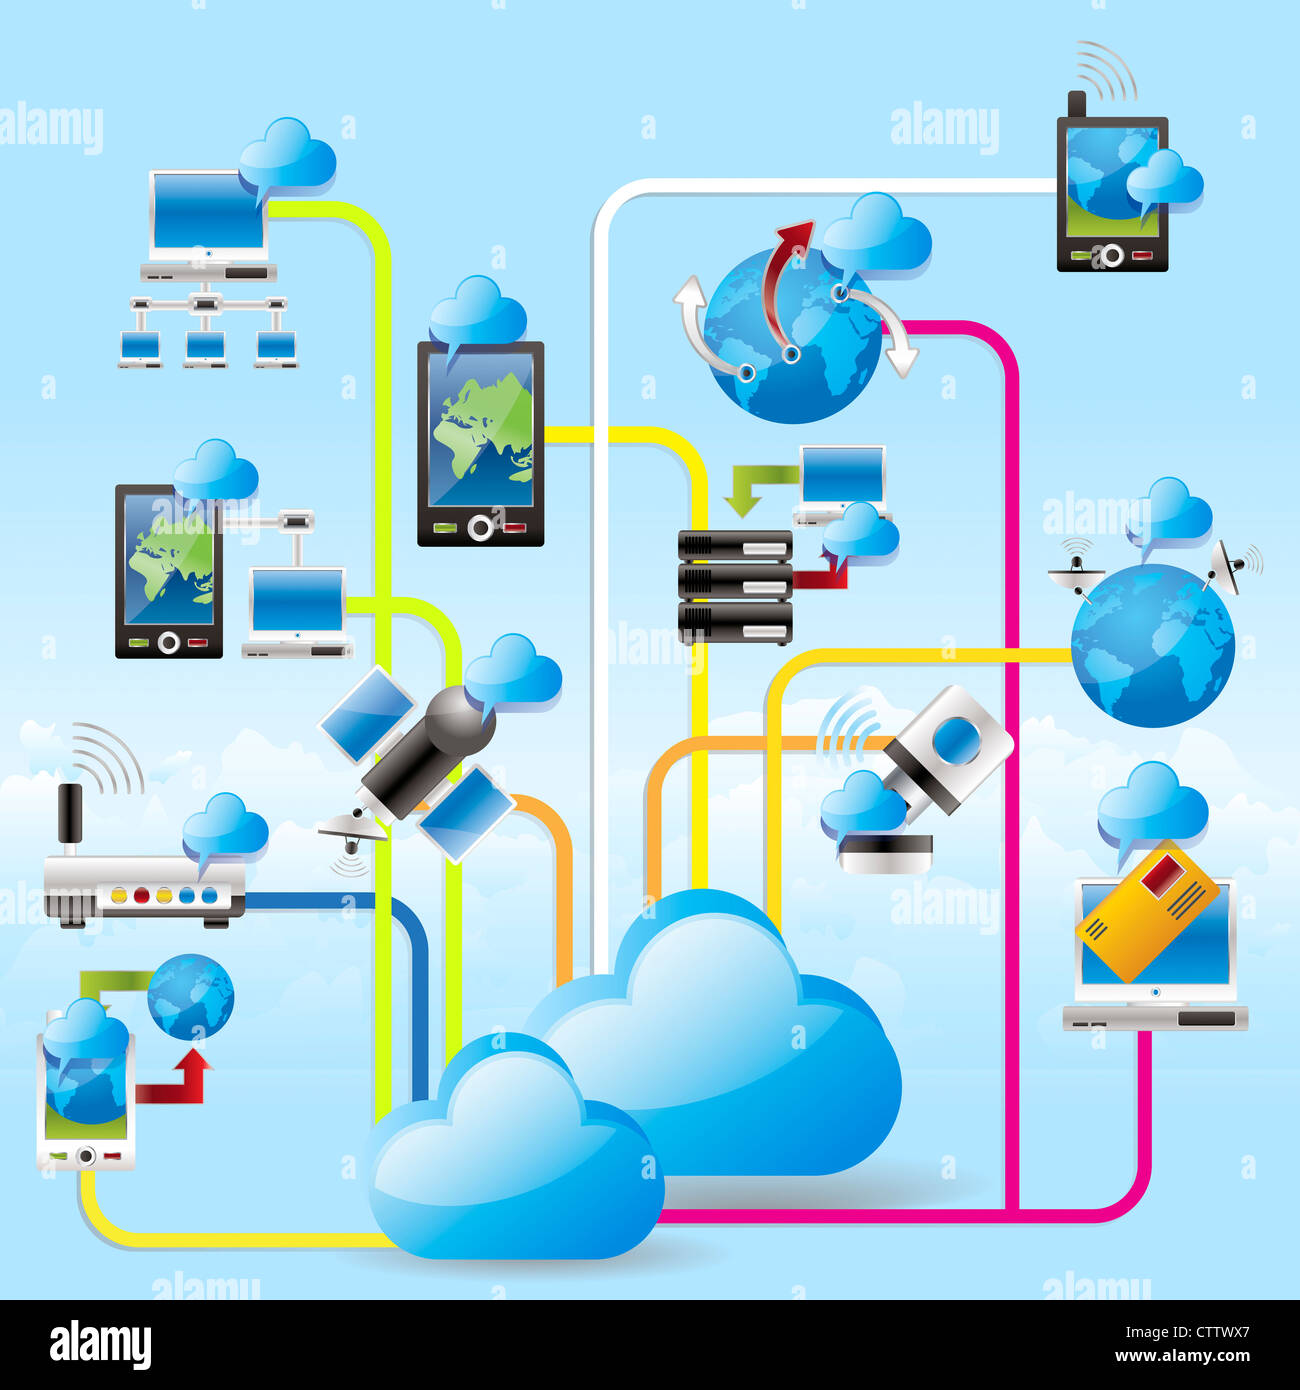 cloud computing networking Stock Photo